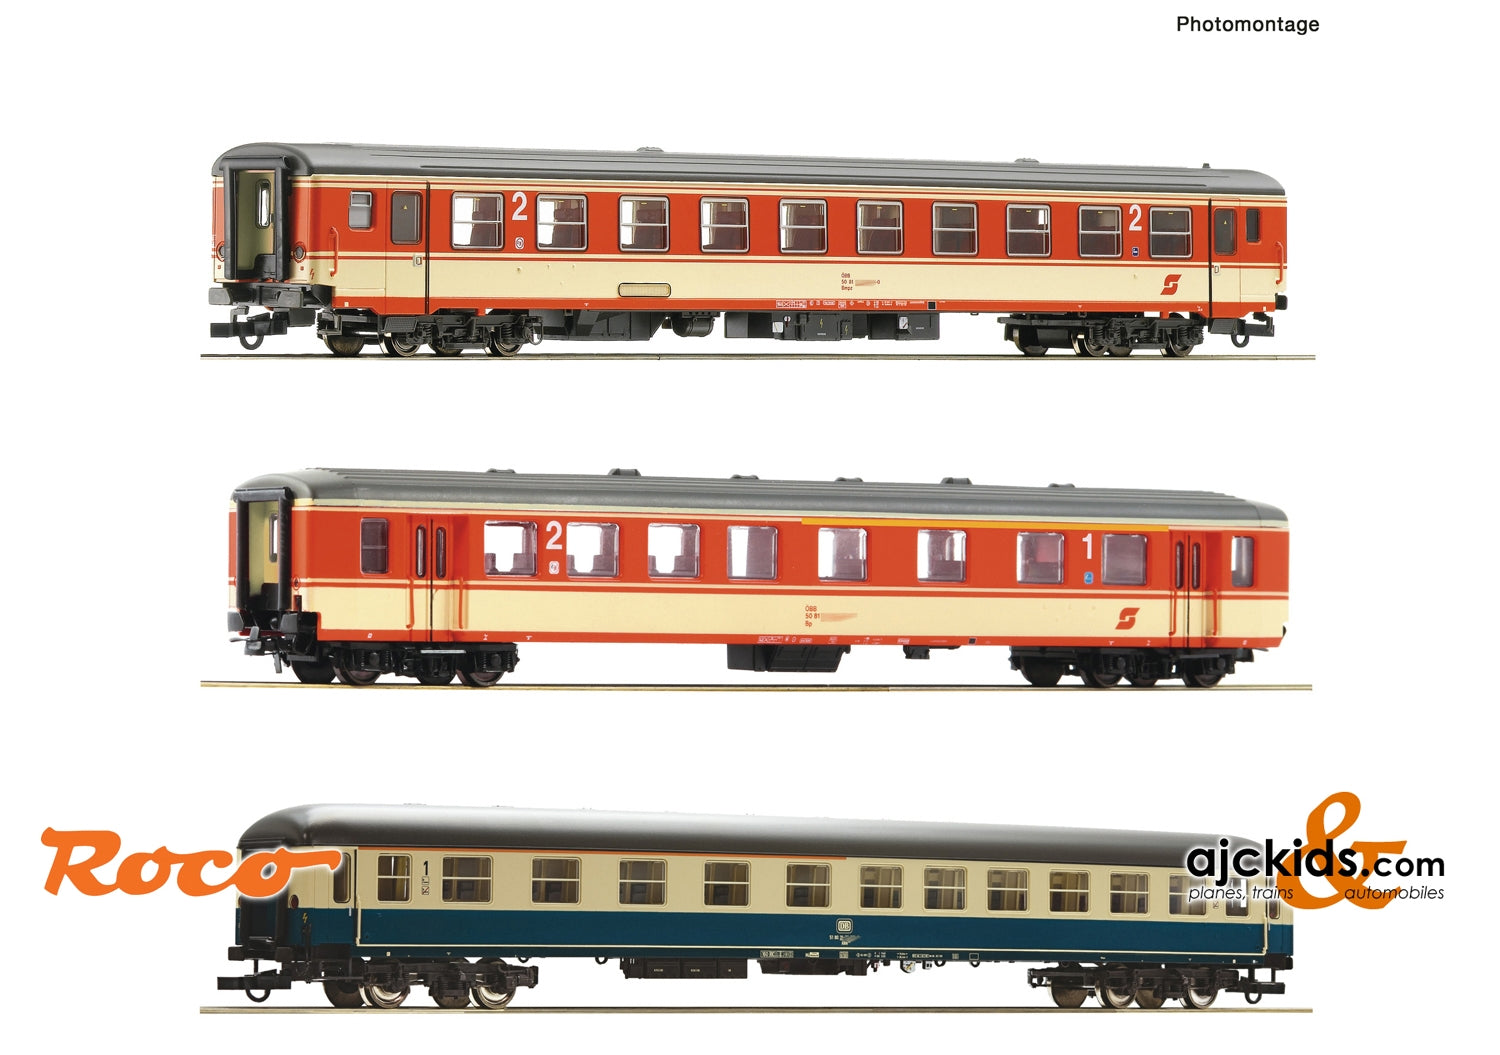 Roco 74051 - 3 piece set 1: Express train “E 712”